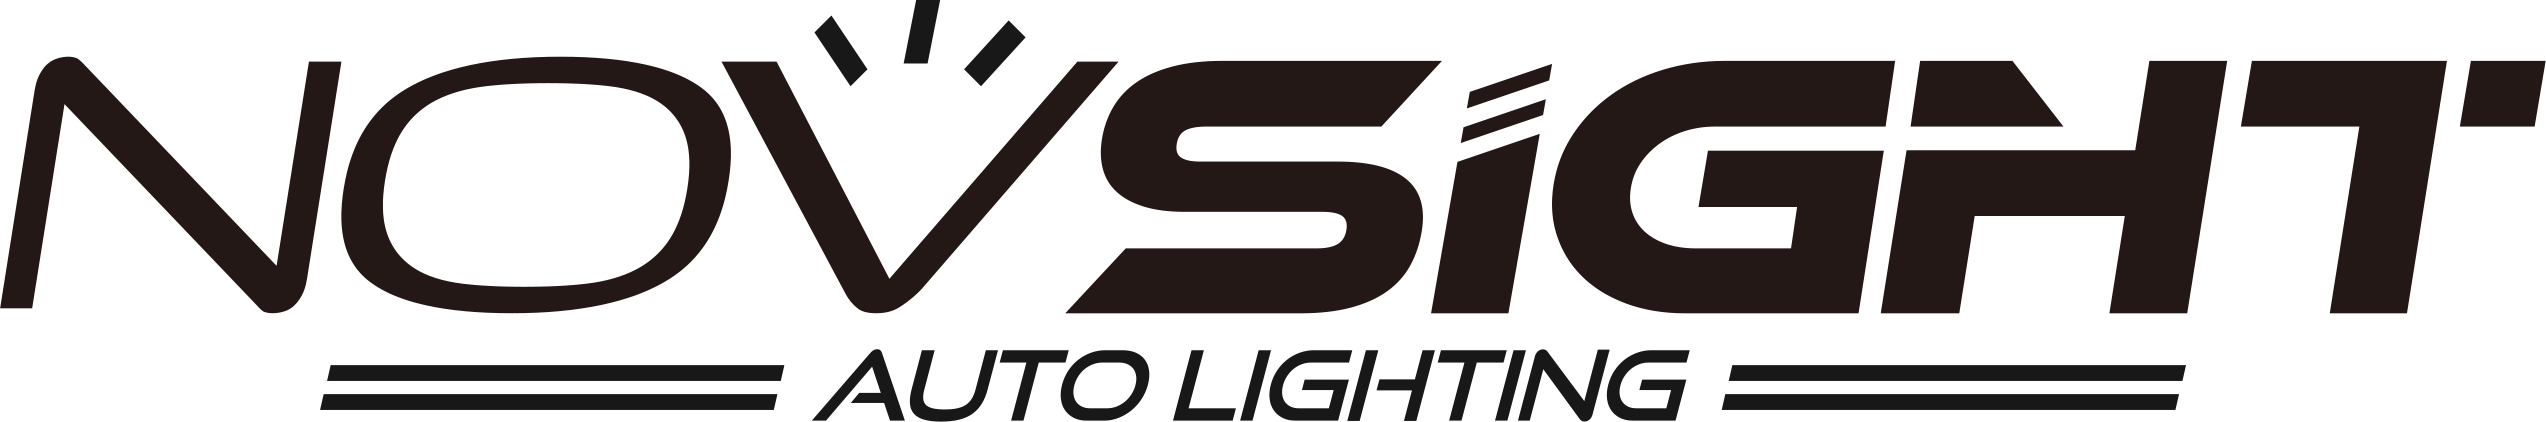 24_Logo_Novsight Lighting Technology, Inc.